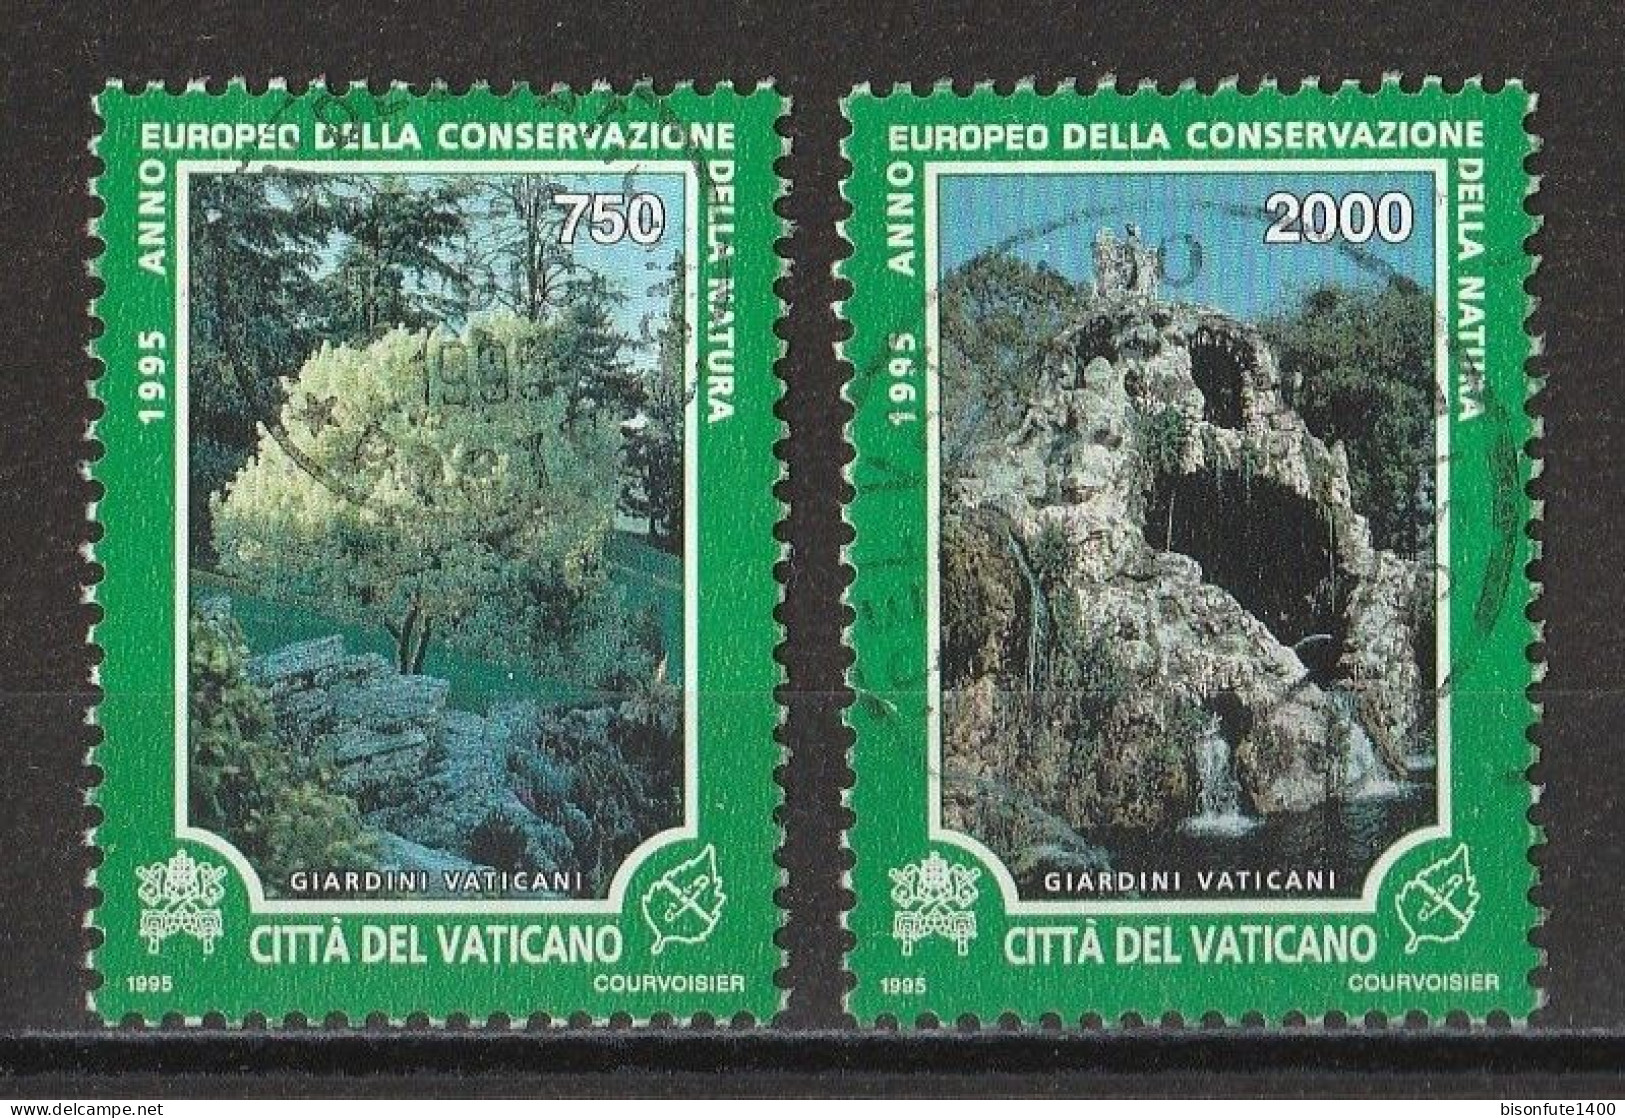 Vatican 1995 : Timbres Yvert & Tellier N° 998 - 999 - 1007 - 1008 - 1009 - 1011 Et 1013 Oblitérés - Usati